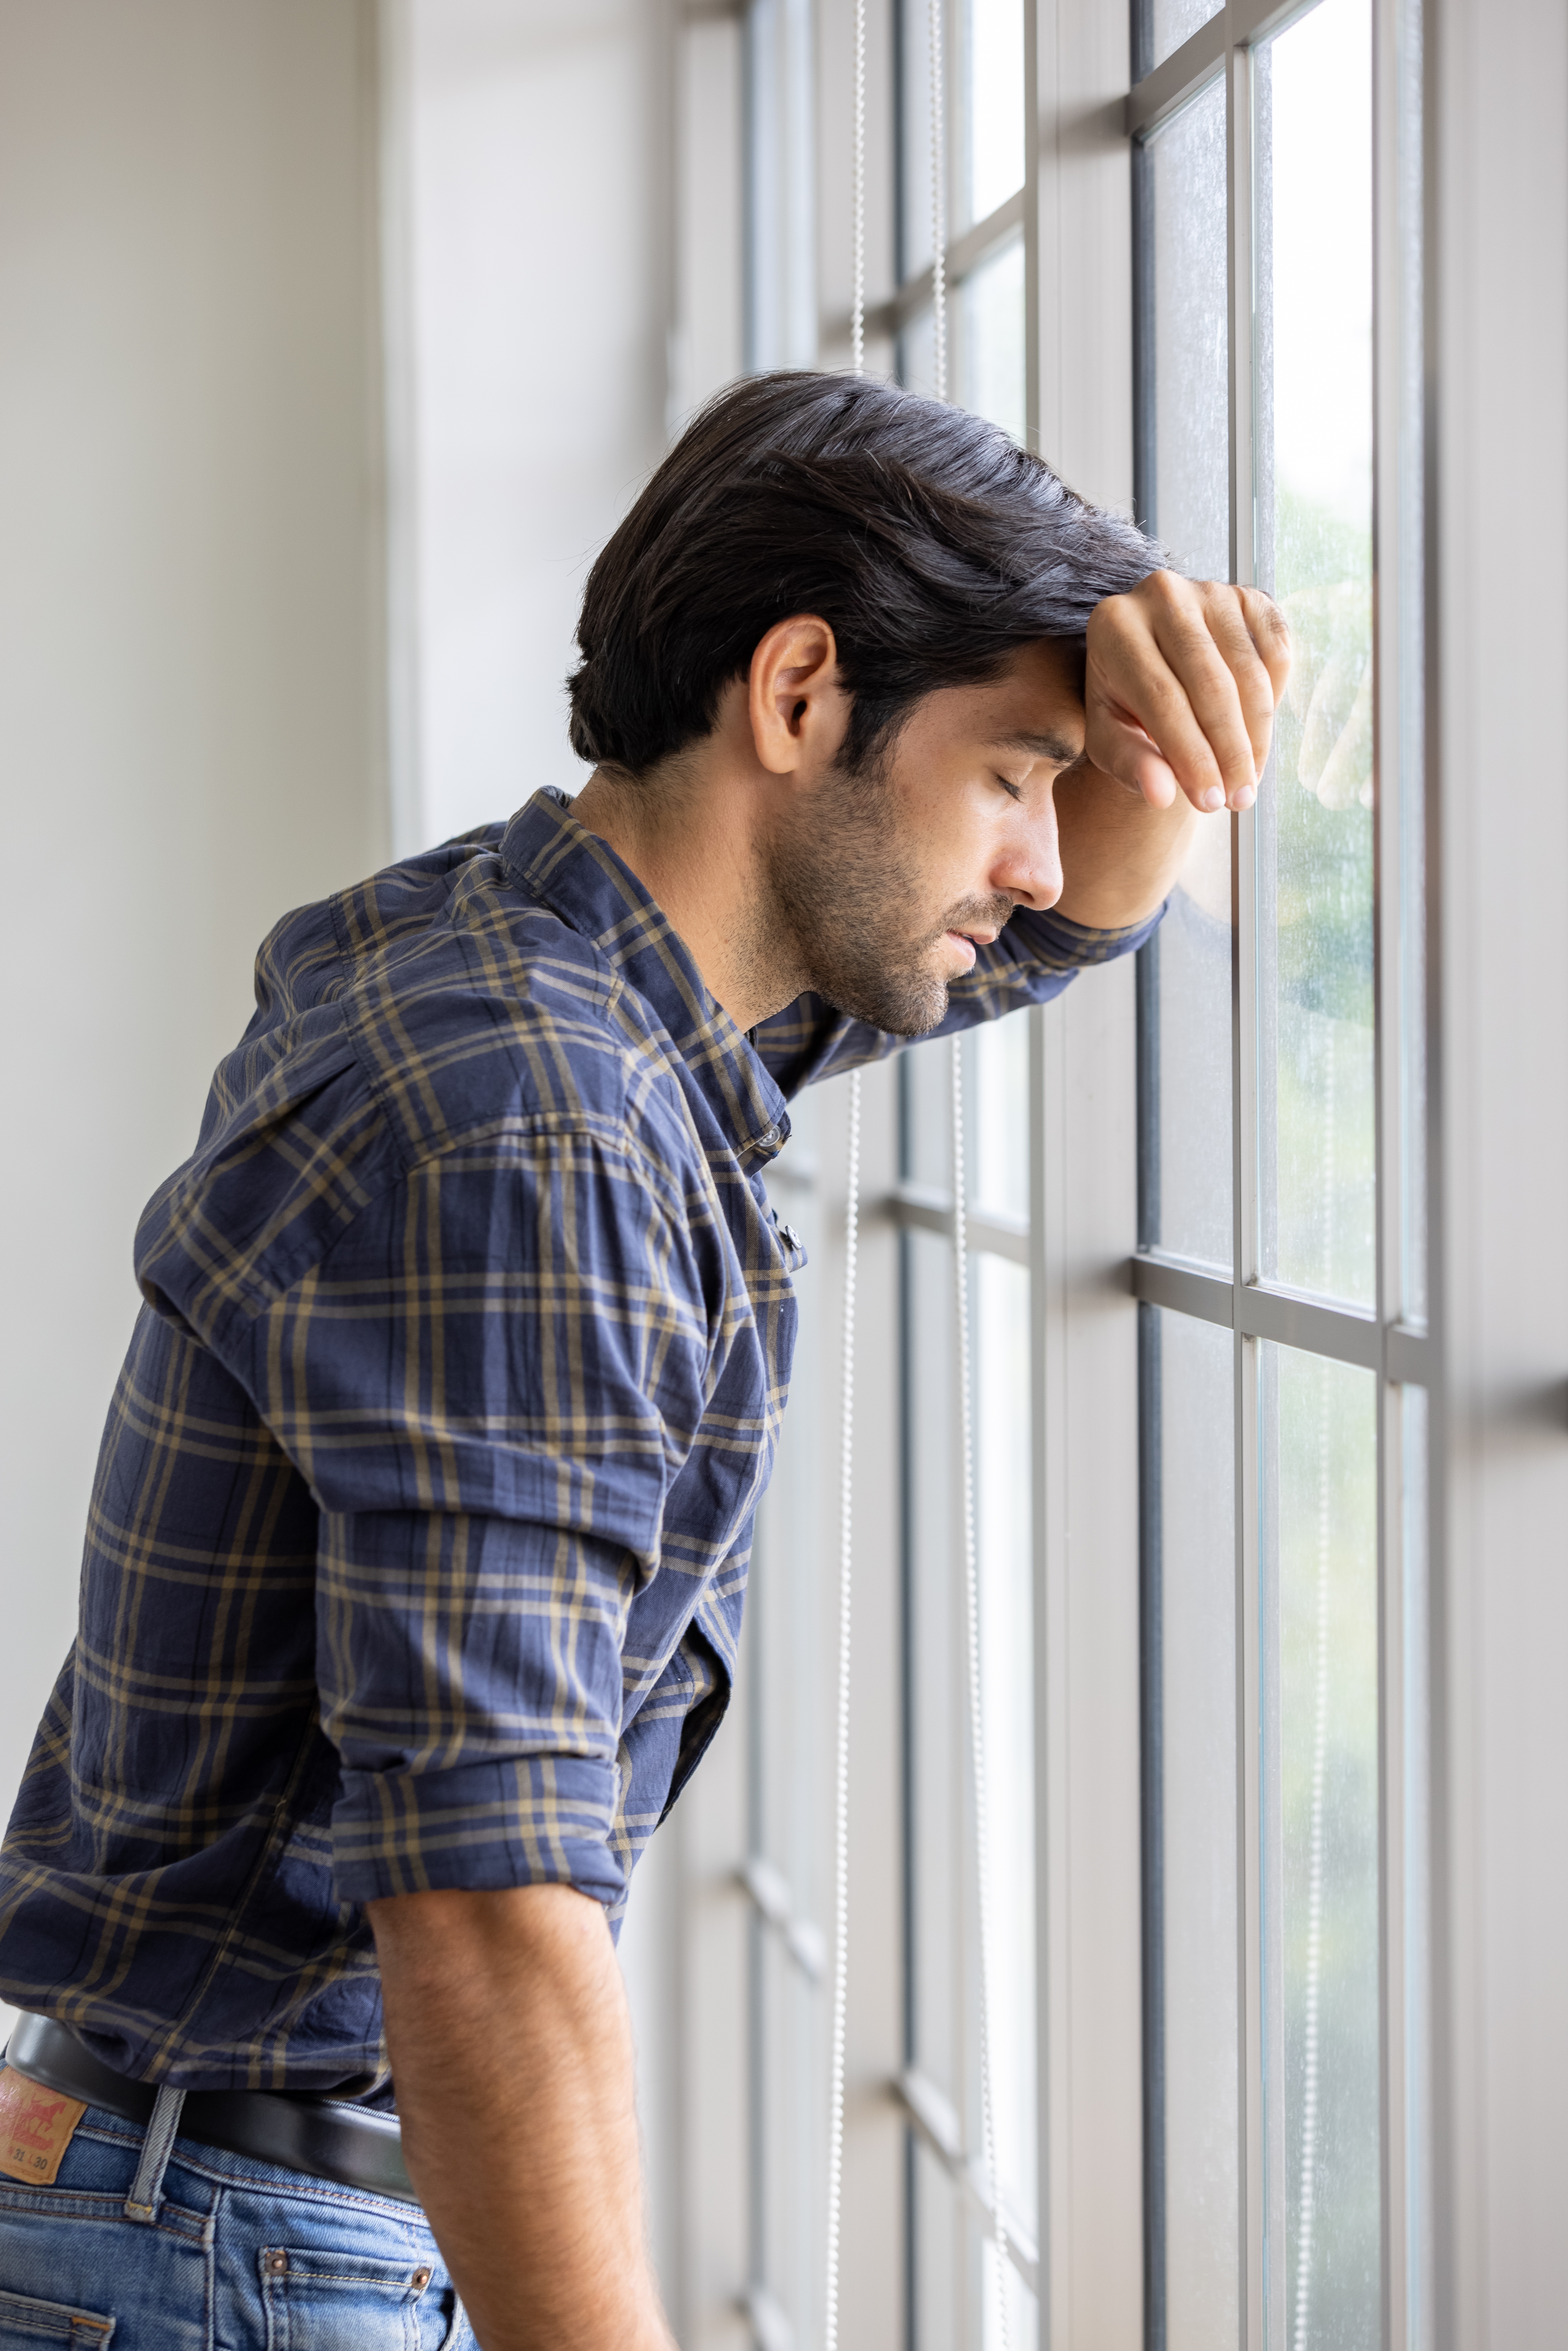 Depressed man | Source: Shutterstock